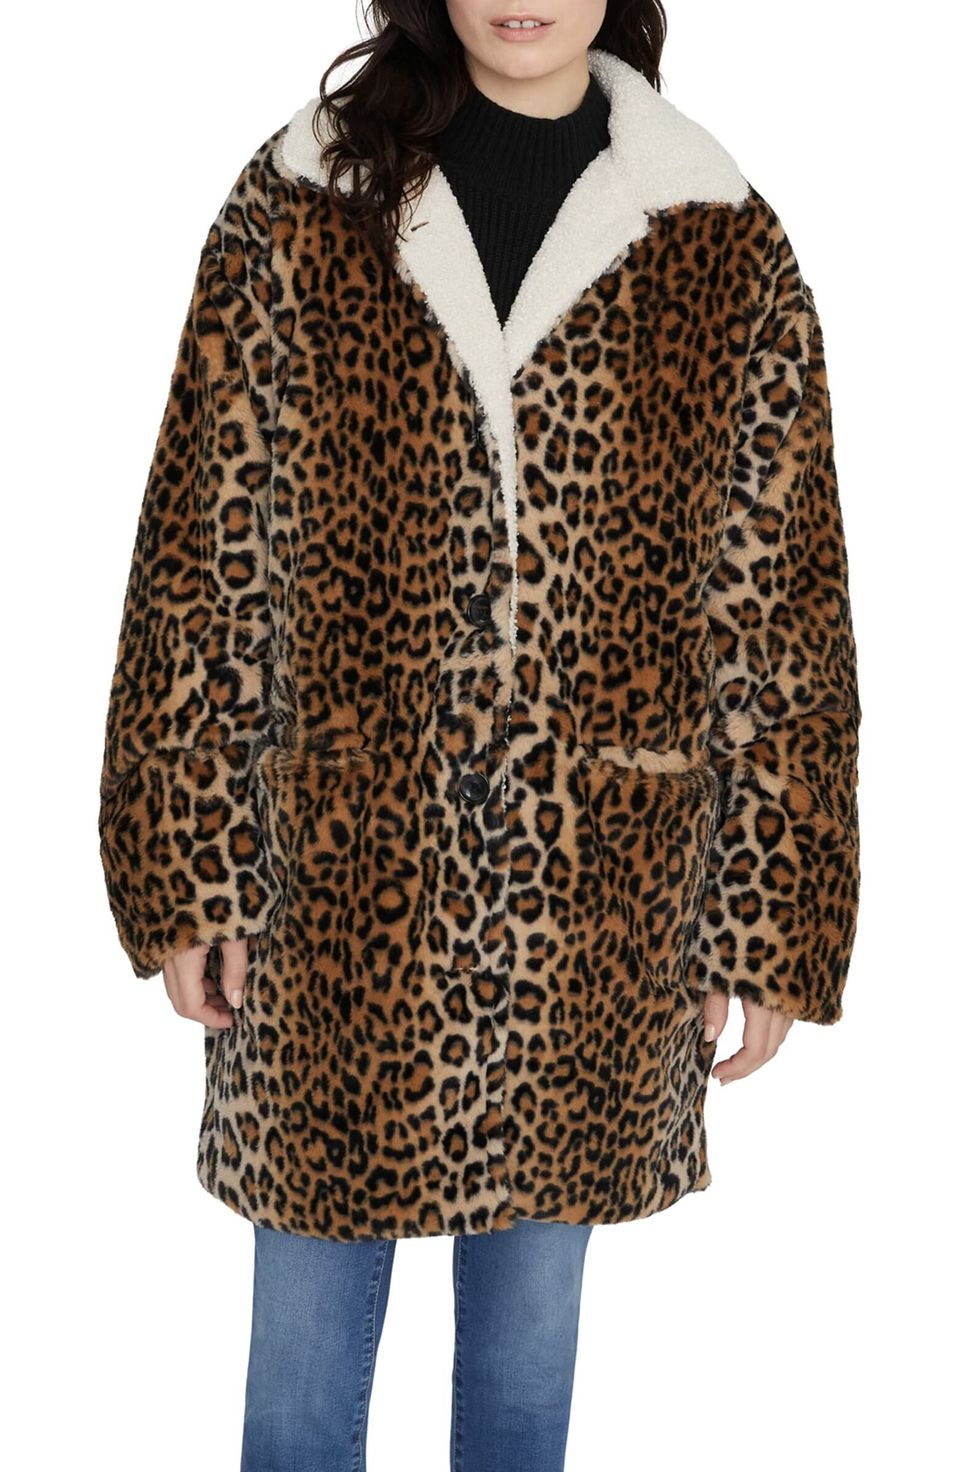 UOFOCO Womens Warm Faux Fur Coat Ladies Solid Jacket Winter Gradient Parka Outerwear 